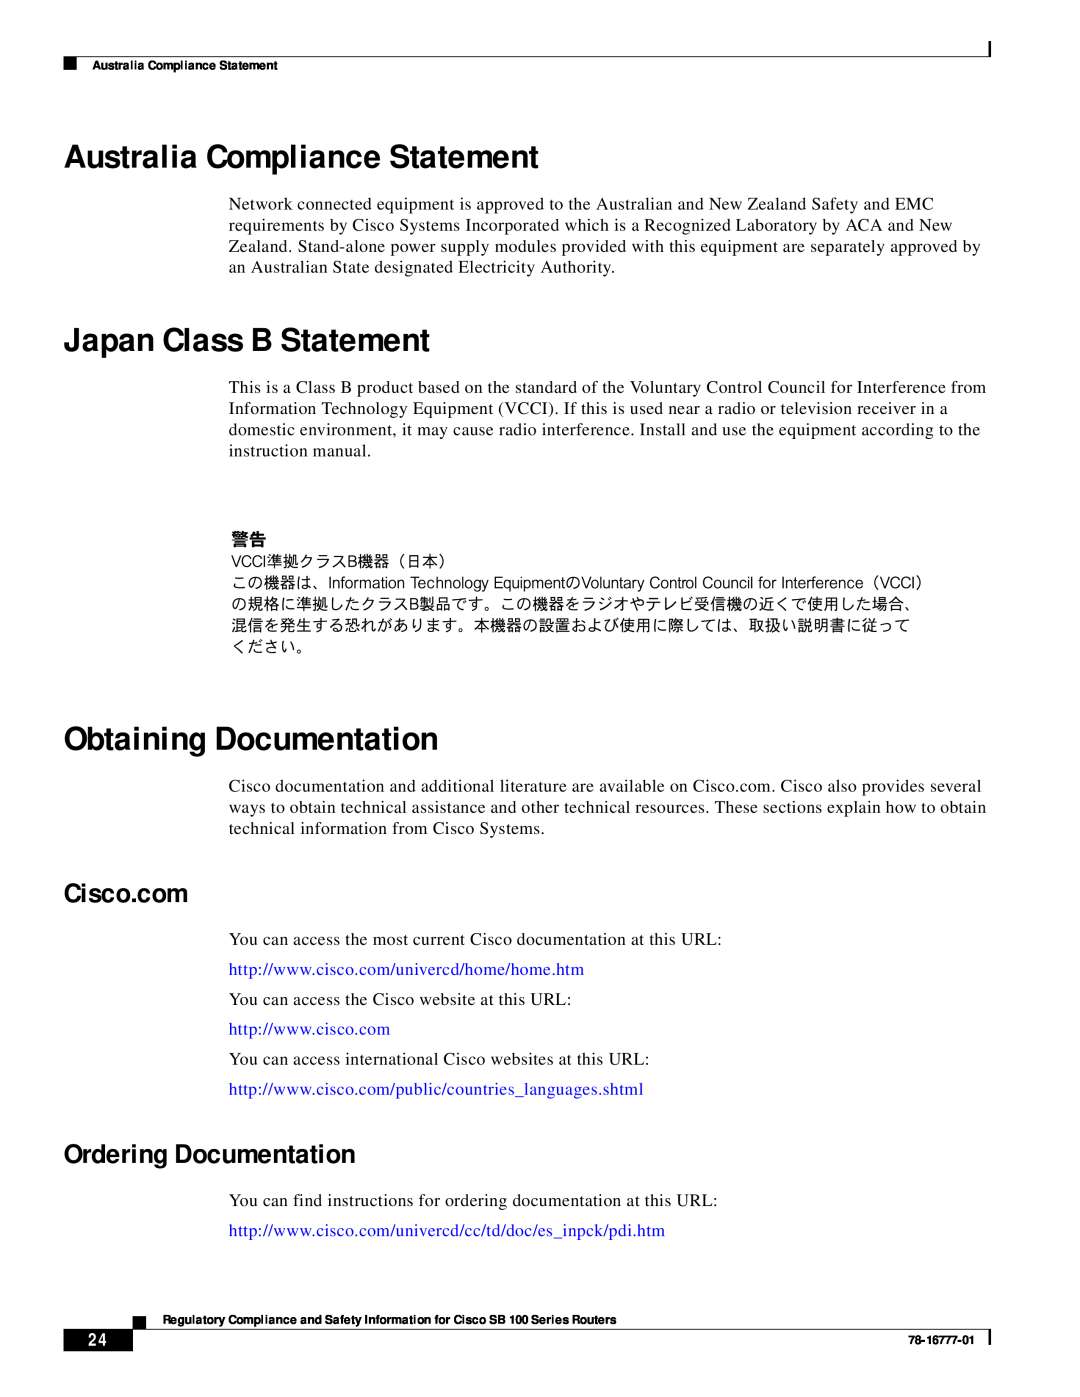 Cisco Systems SB 100 Series Australia Compliance Statement, Japan Class B Statement, Obtaining Documentation, Cisco.com 